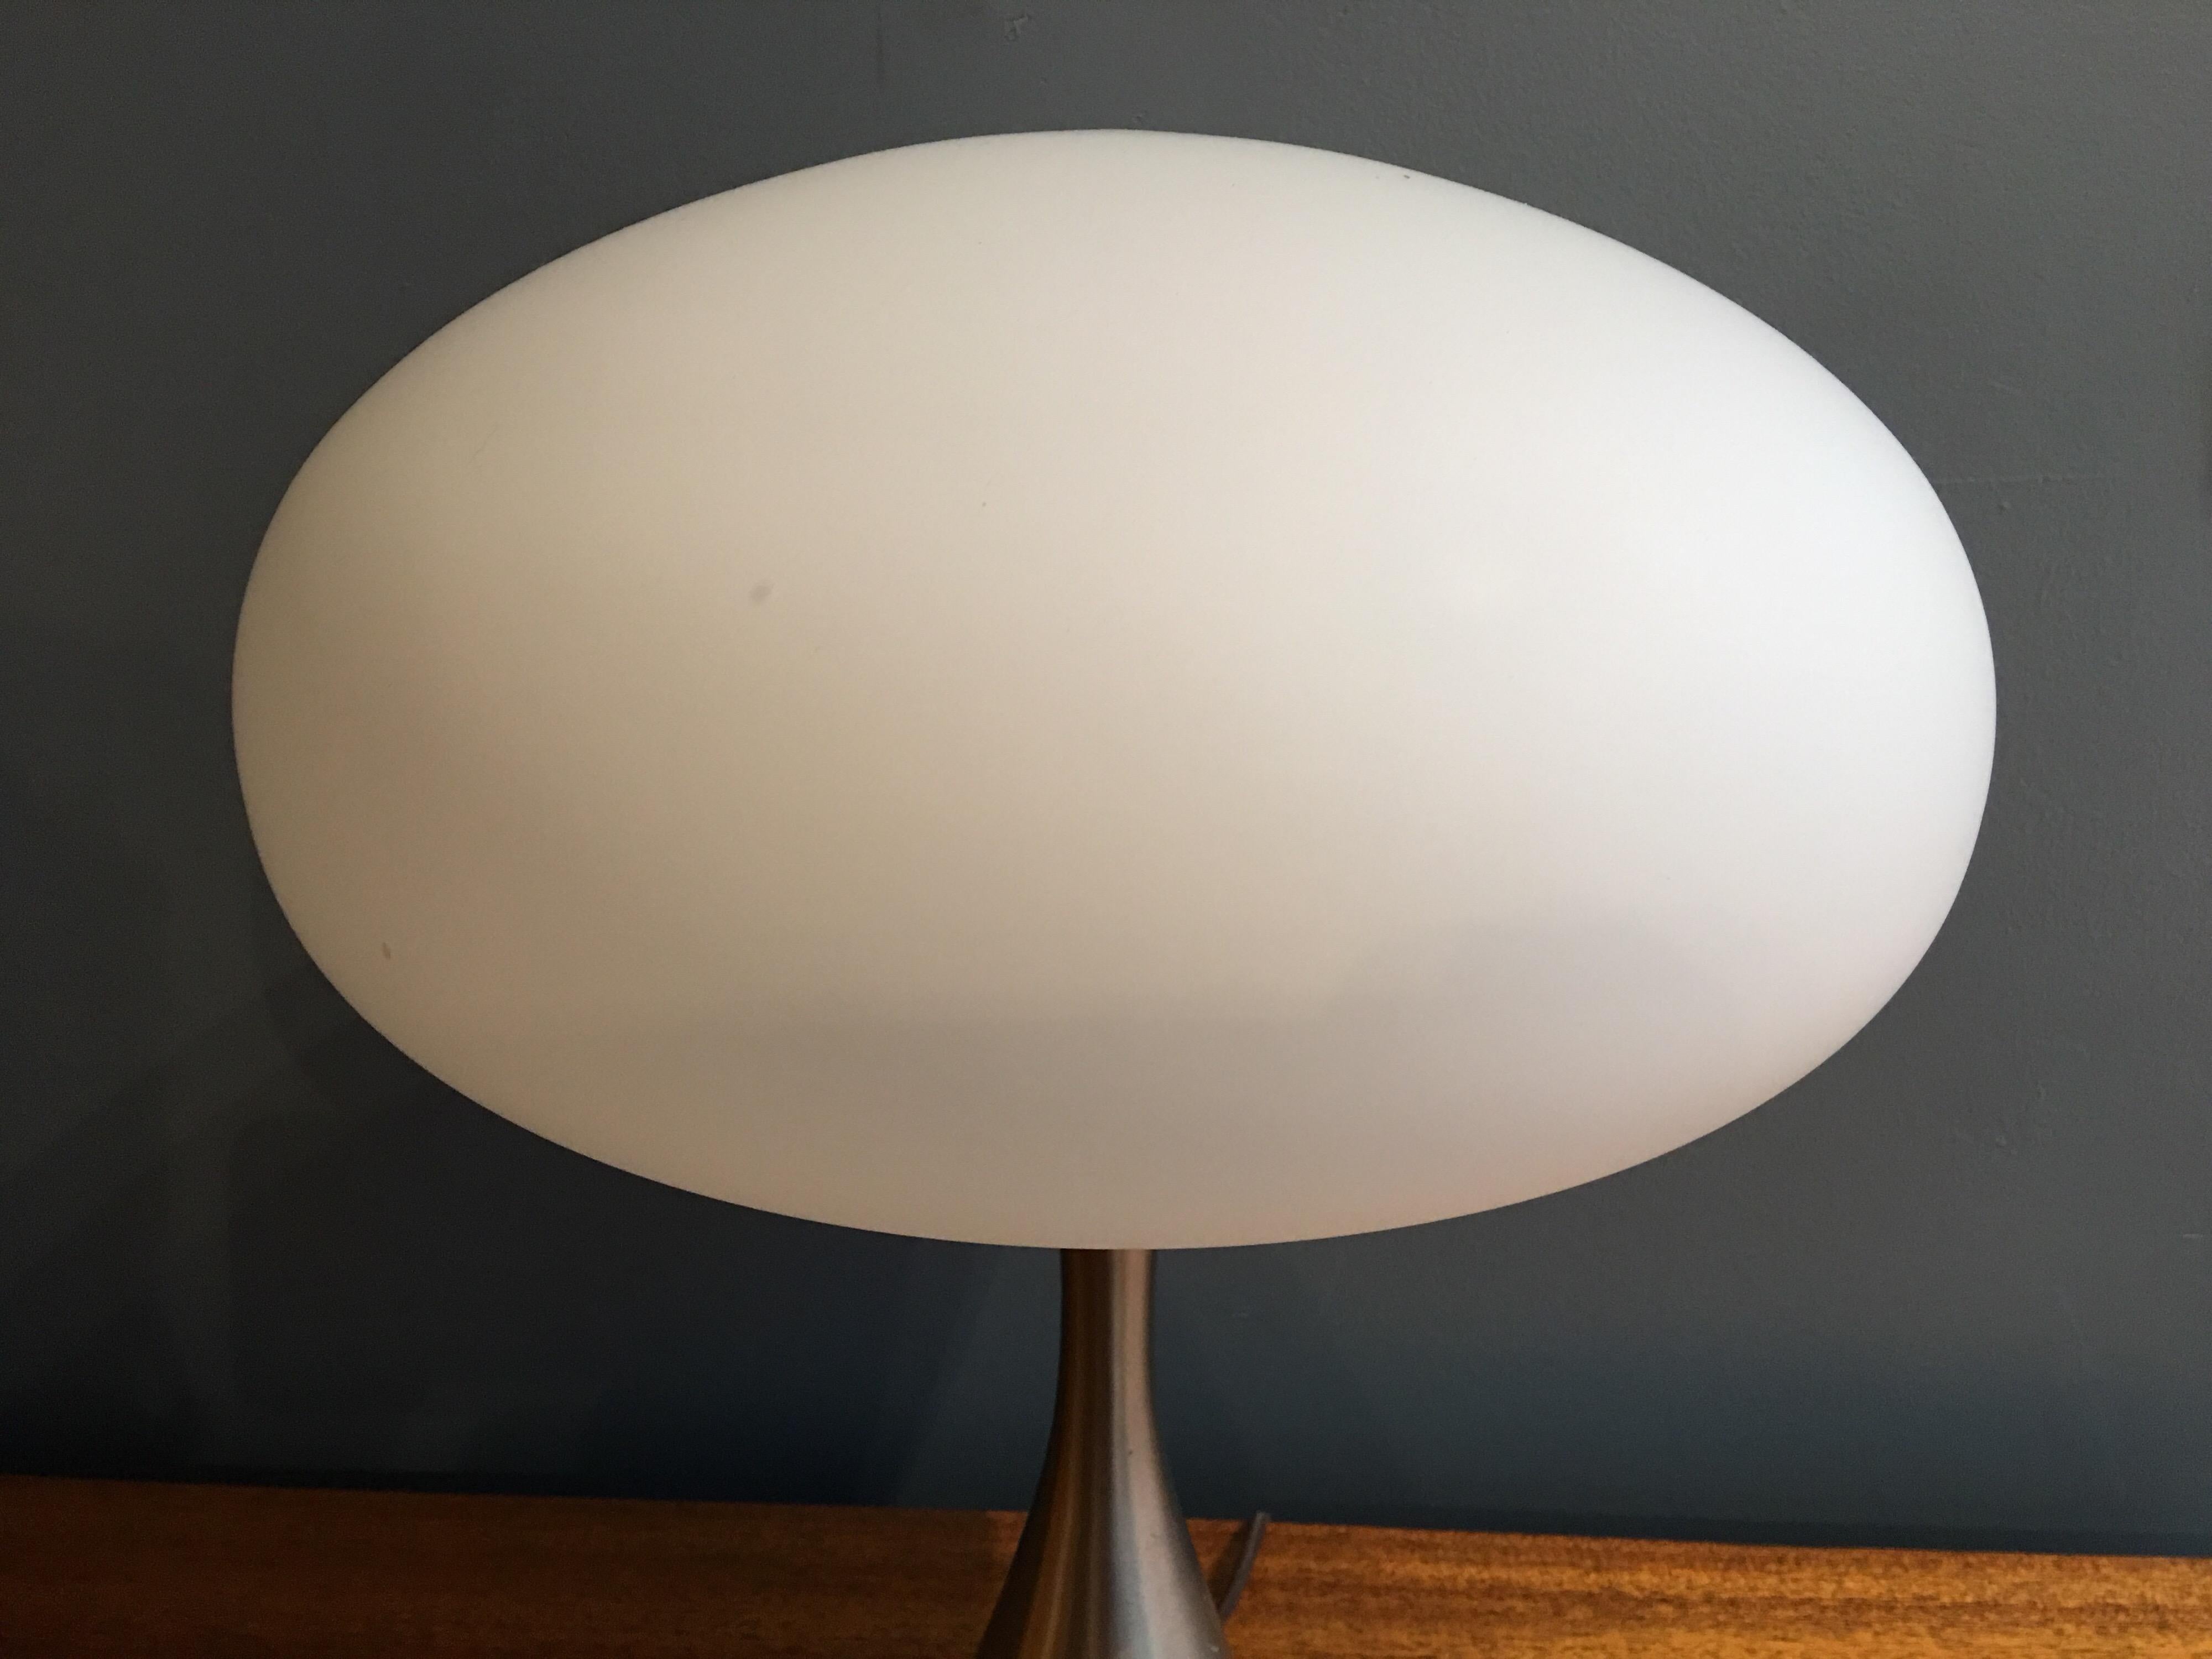 Nice satin finish Laurel mushroom table lamp, retains original label.